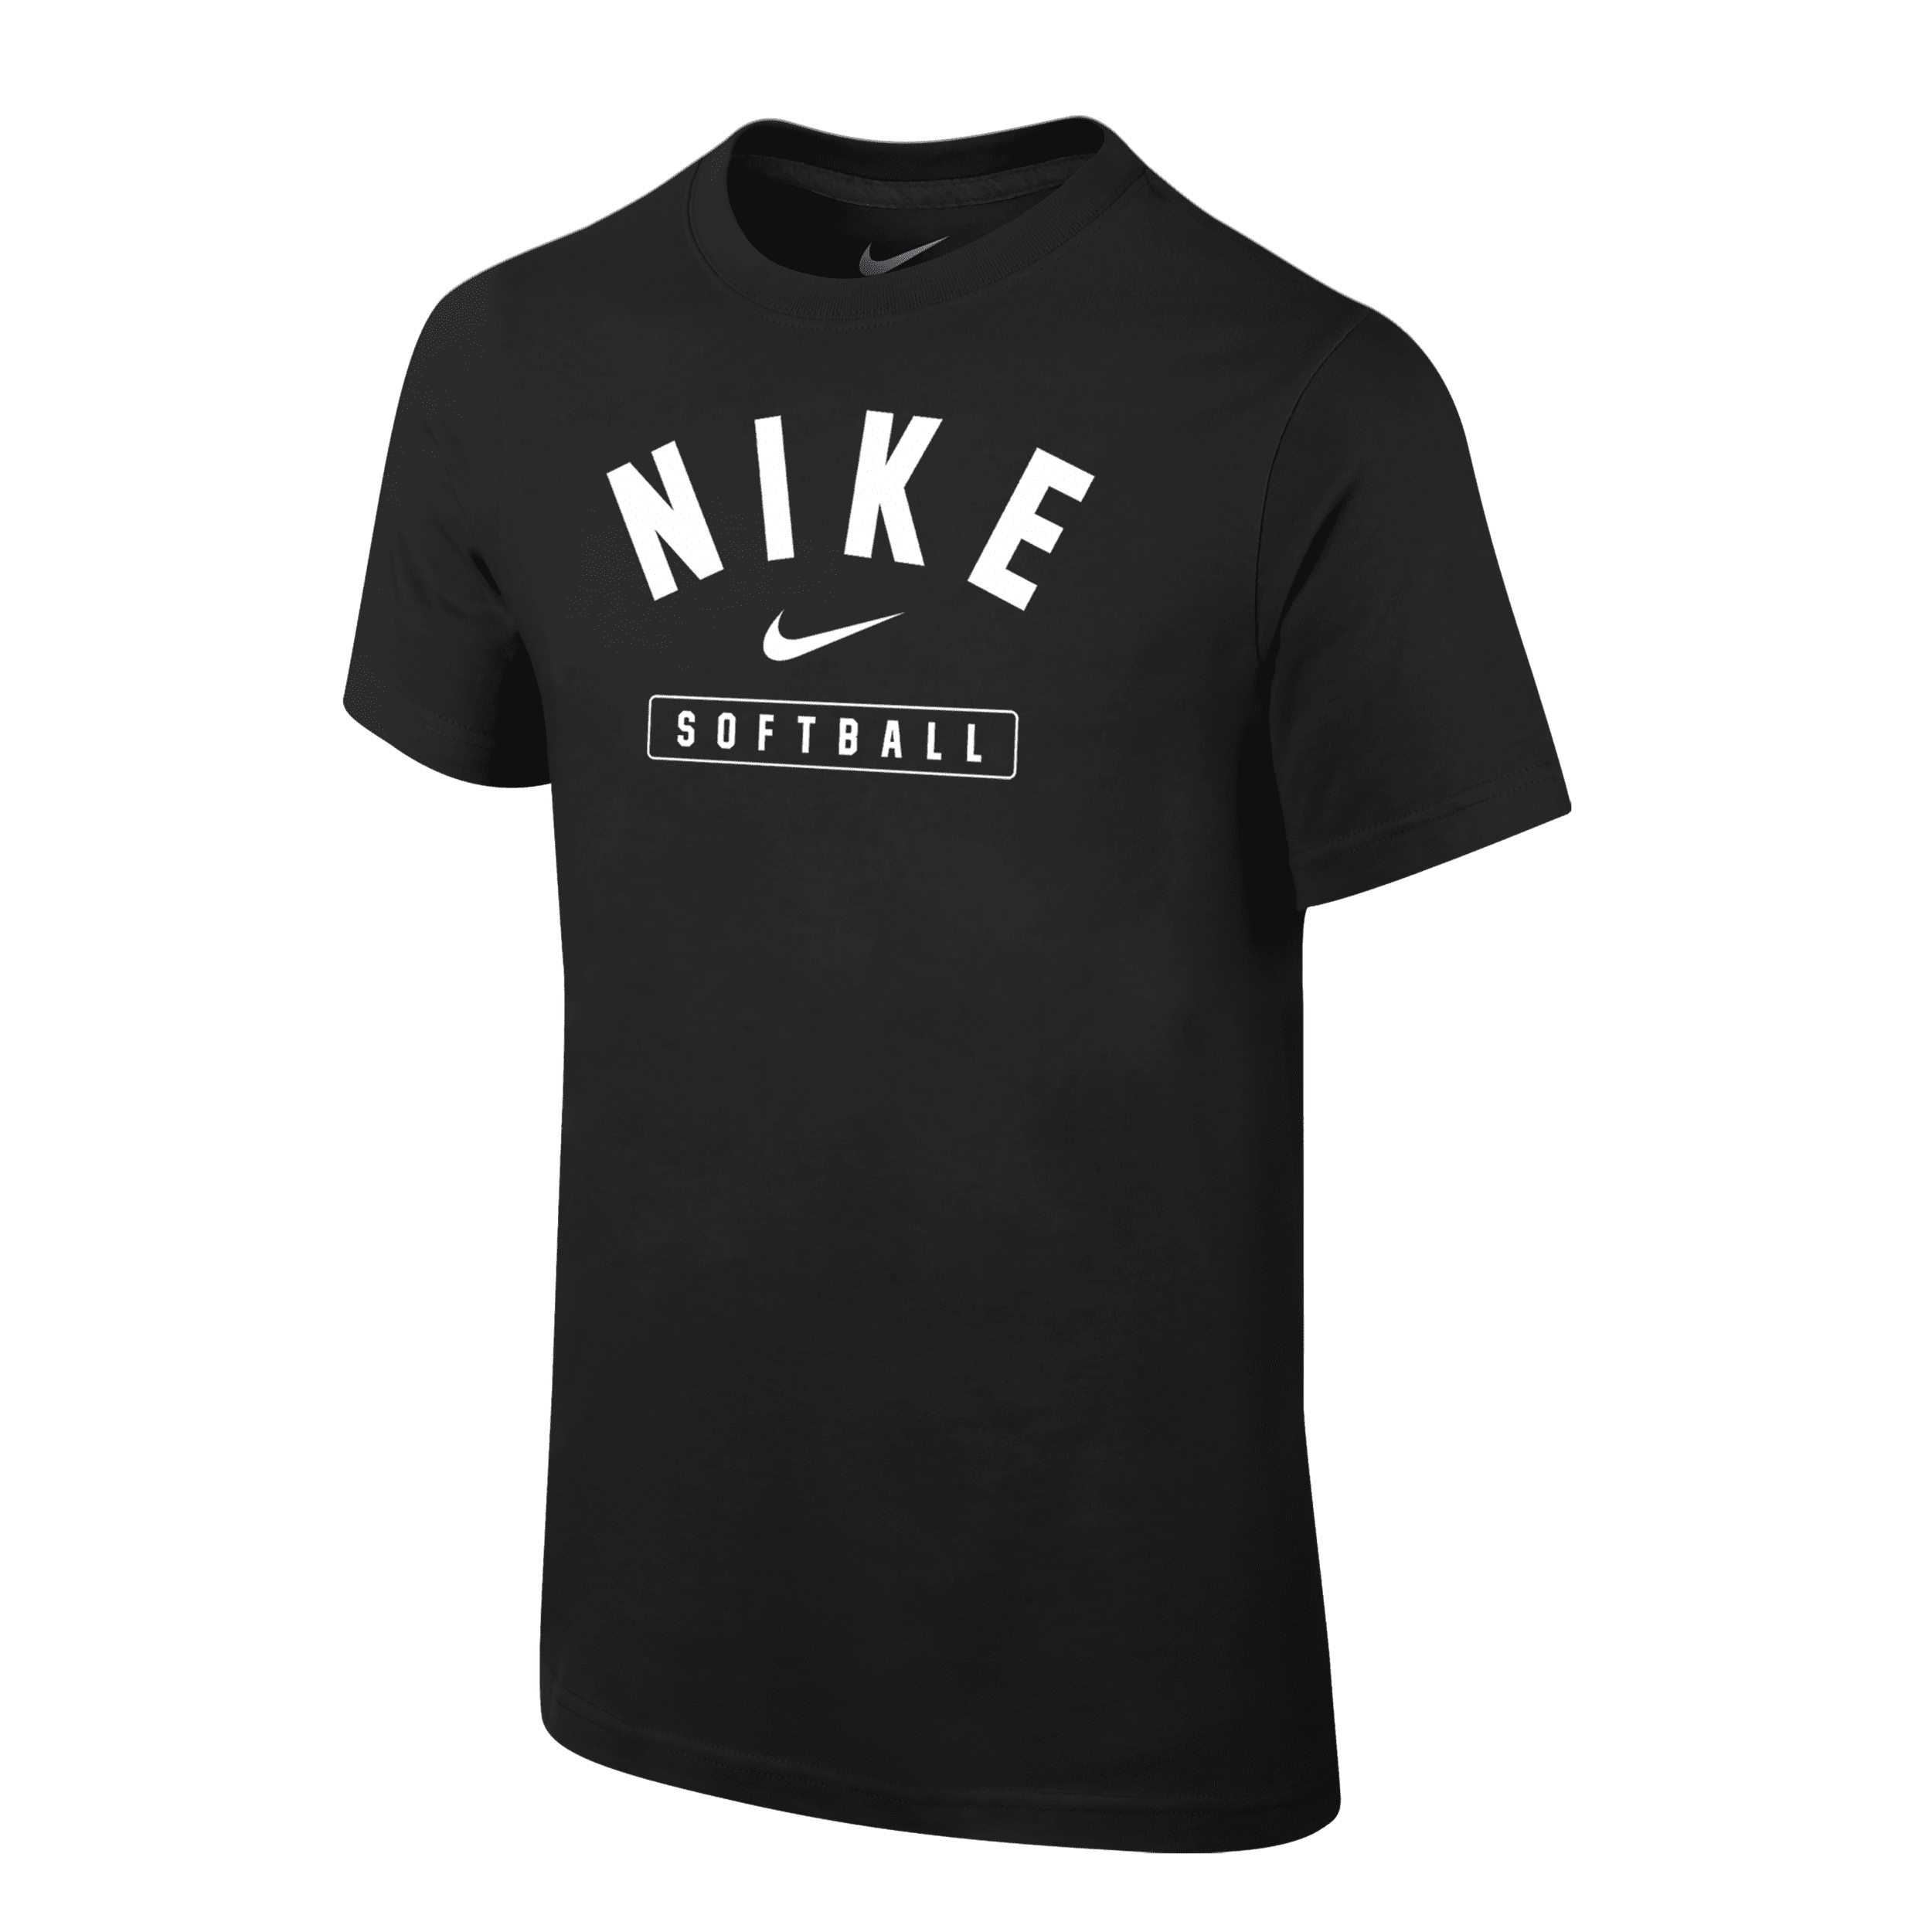 Nike Big Kids' Softball T-shirt In Black